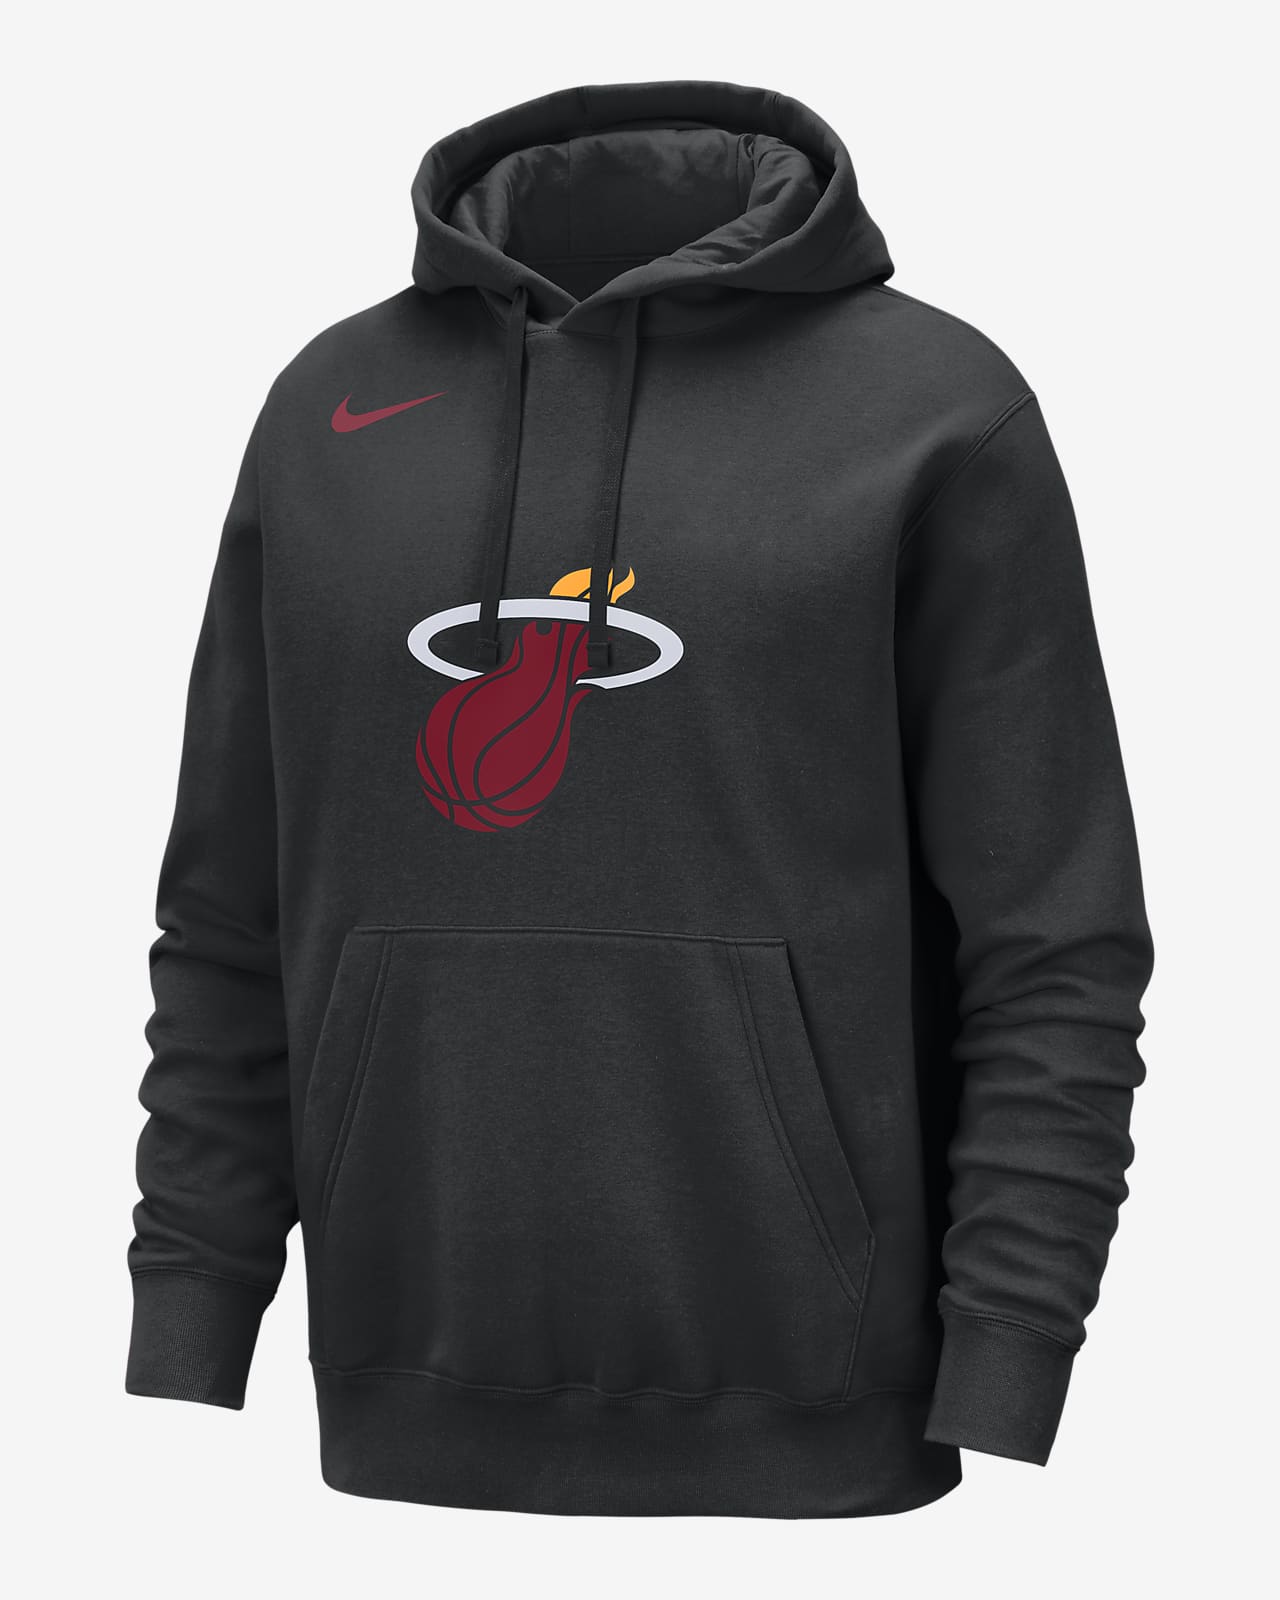 Miami Heat Club Sudadera con capucha Nike de la NBA - Hombre